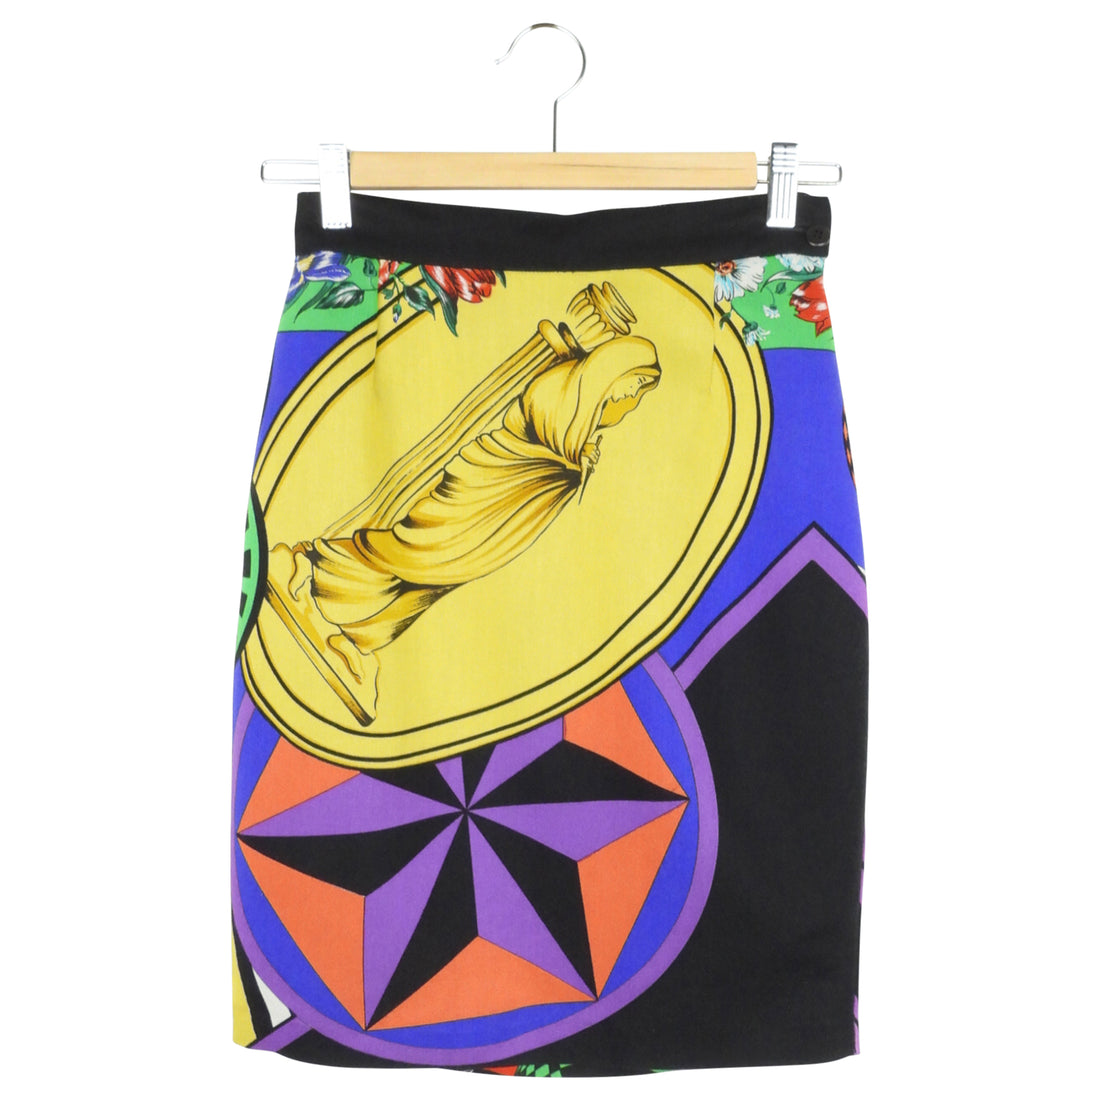 Versus Gianni Versace Multicolor Printed Pencil Skirt - 26 / 40